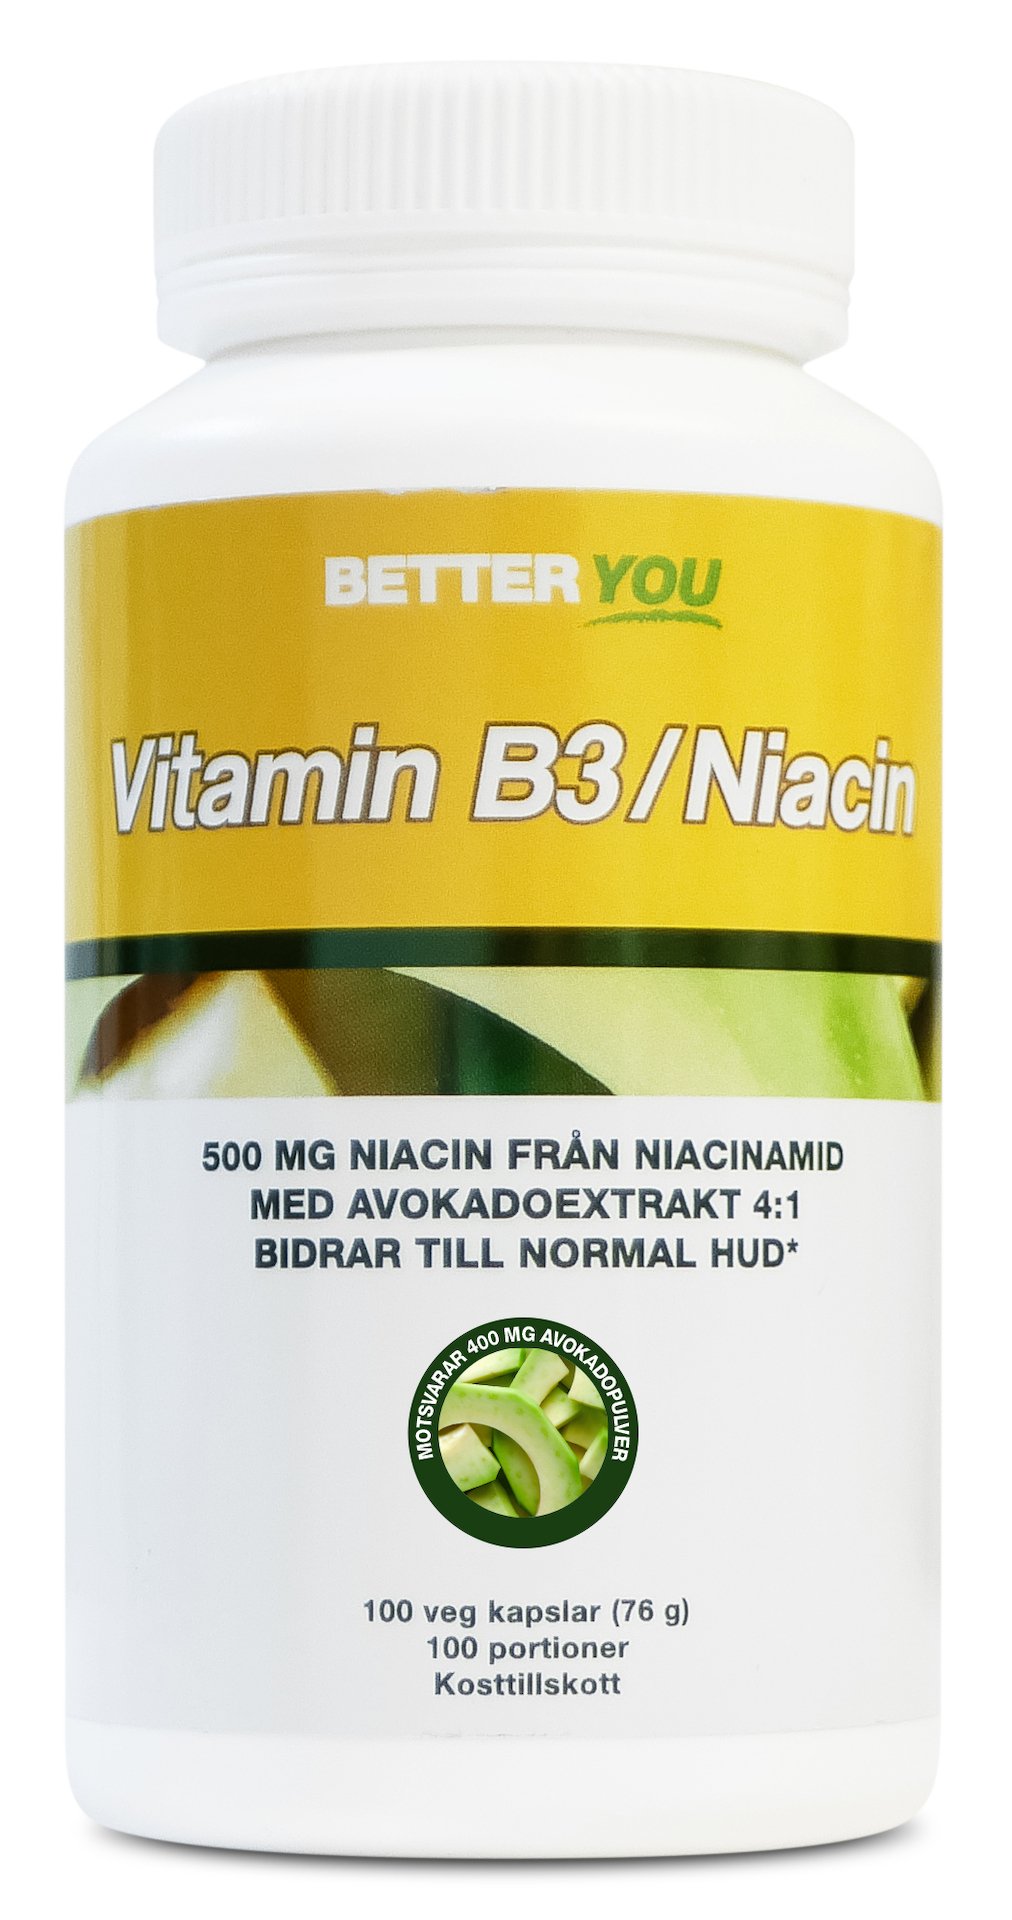 Better You Vitamin B3 / Niacin - 100 kapslar